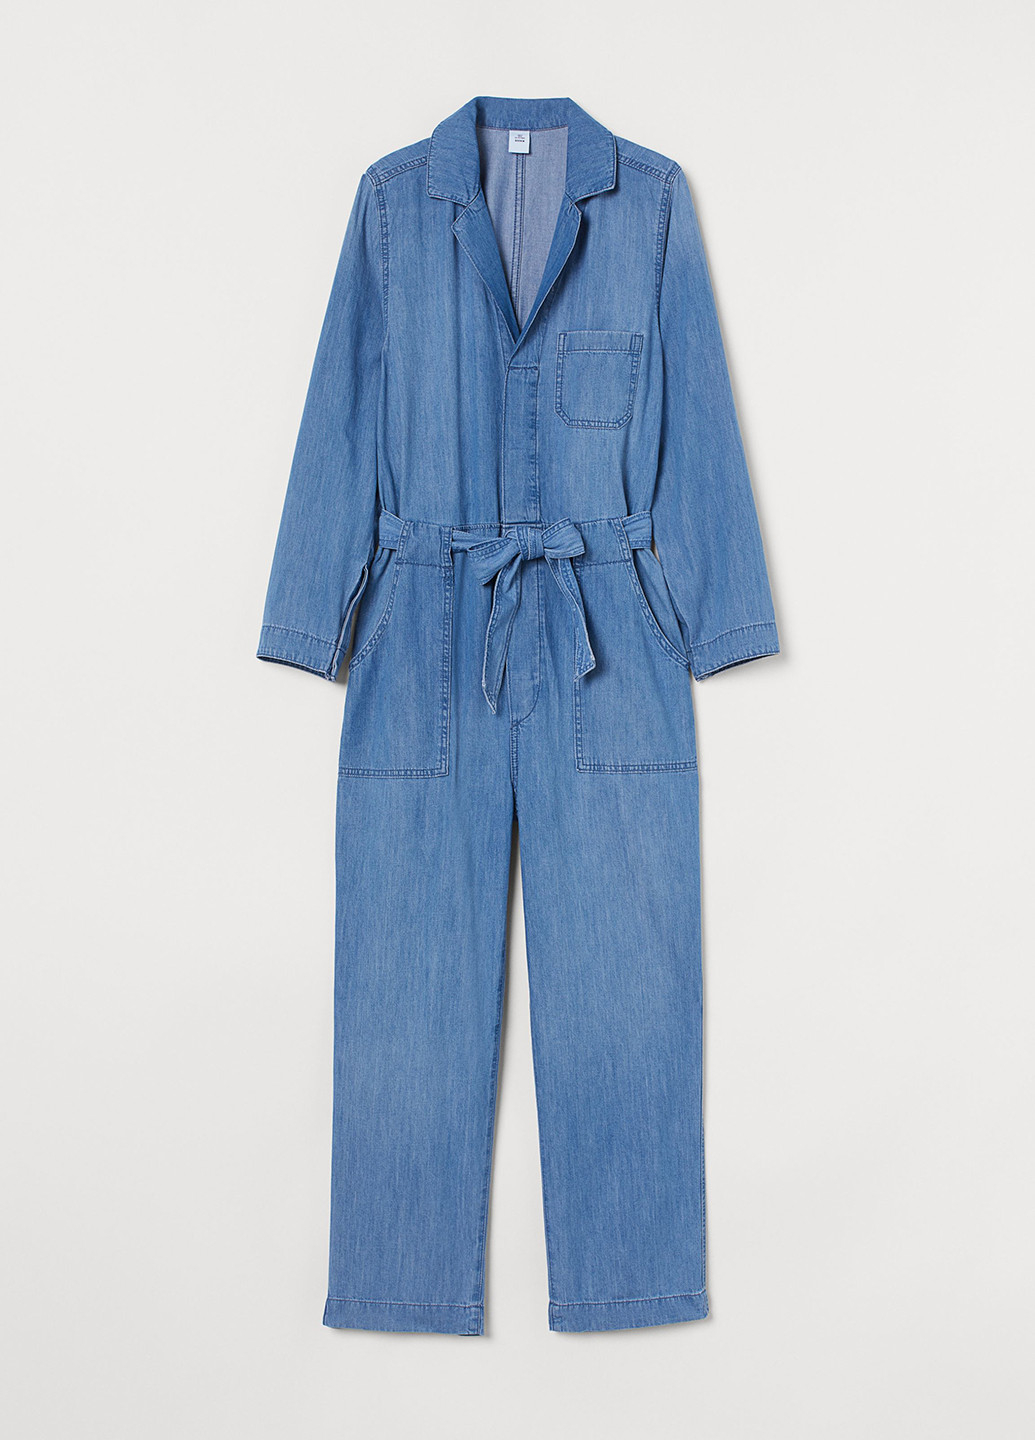 Комбинезон H&M комбинезон-брюки однотонный синий денил хлопок